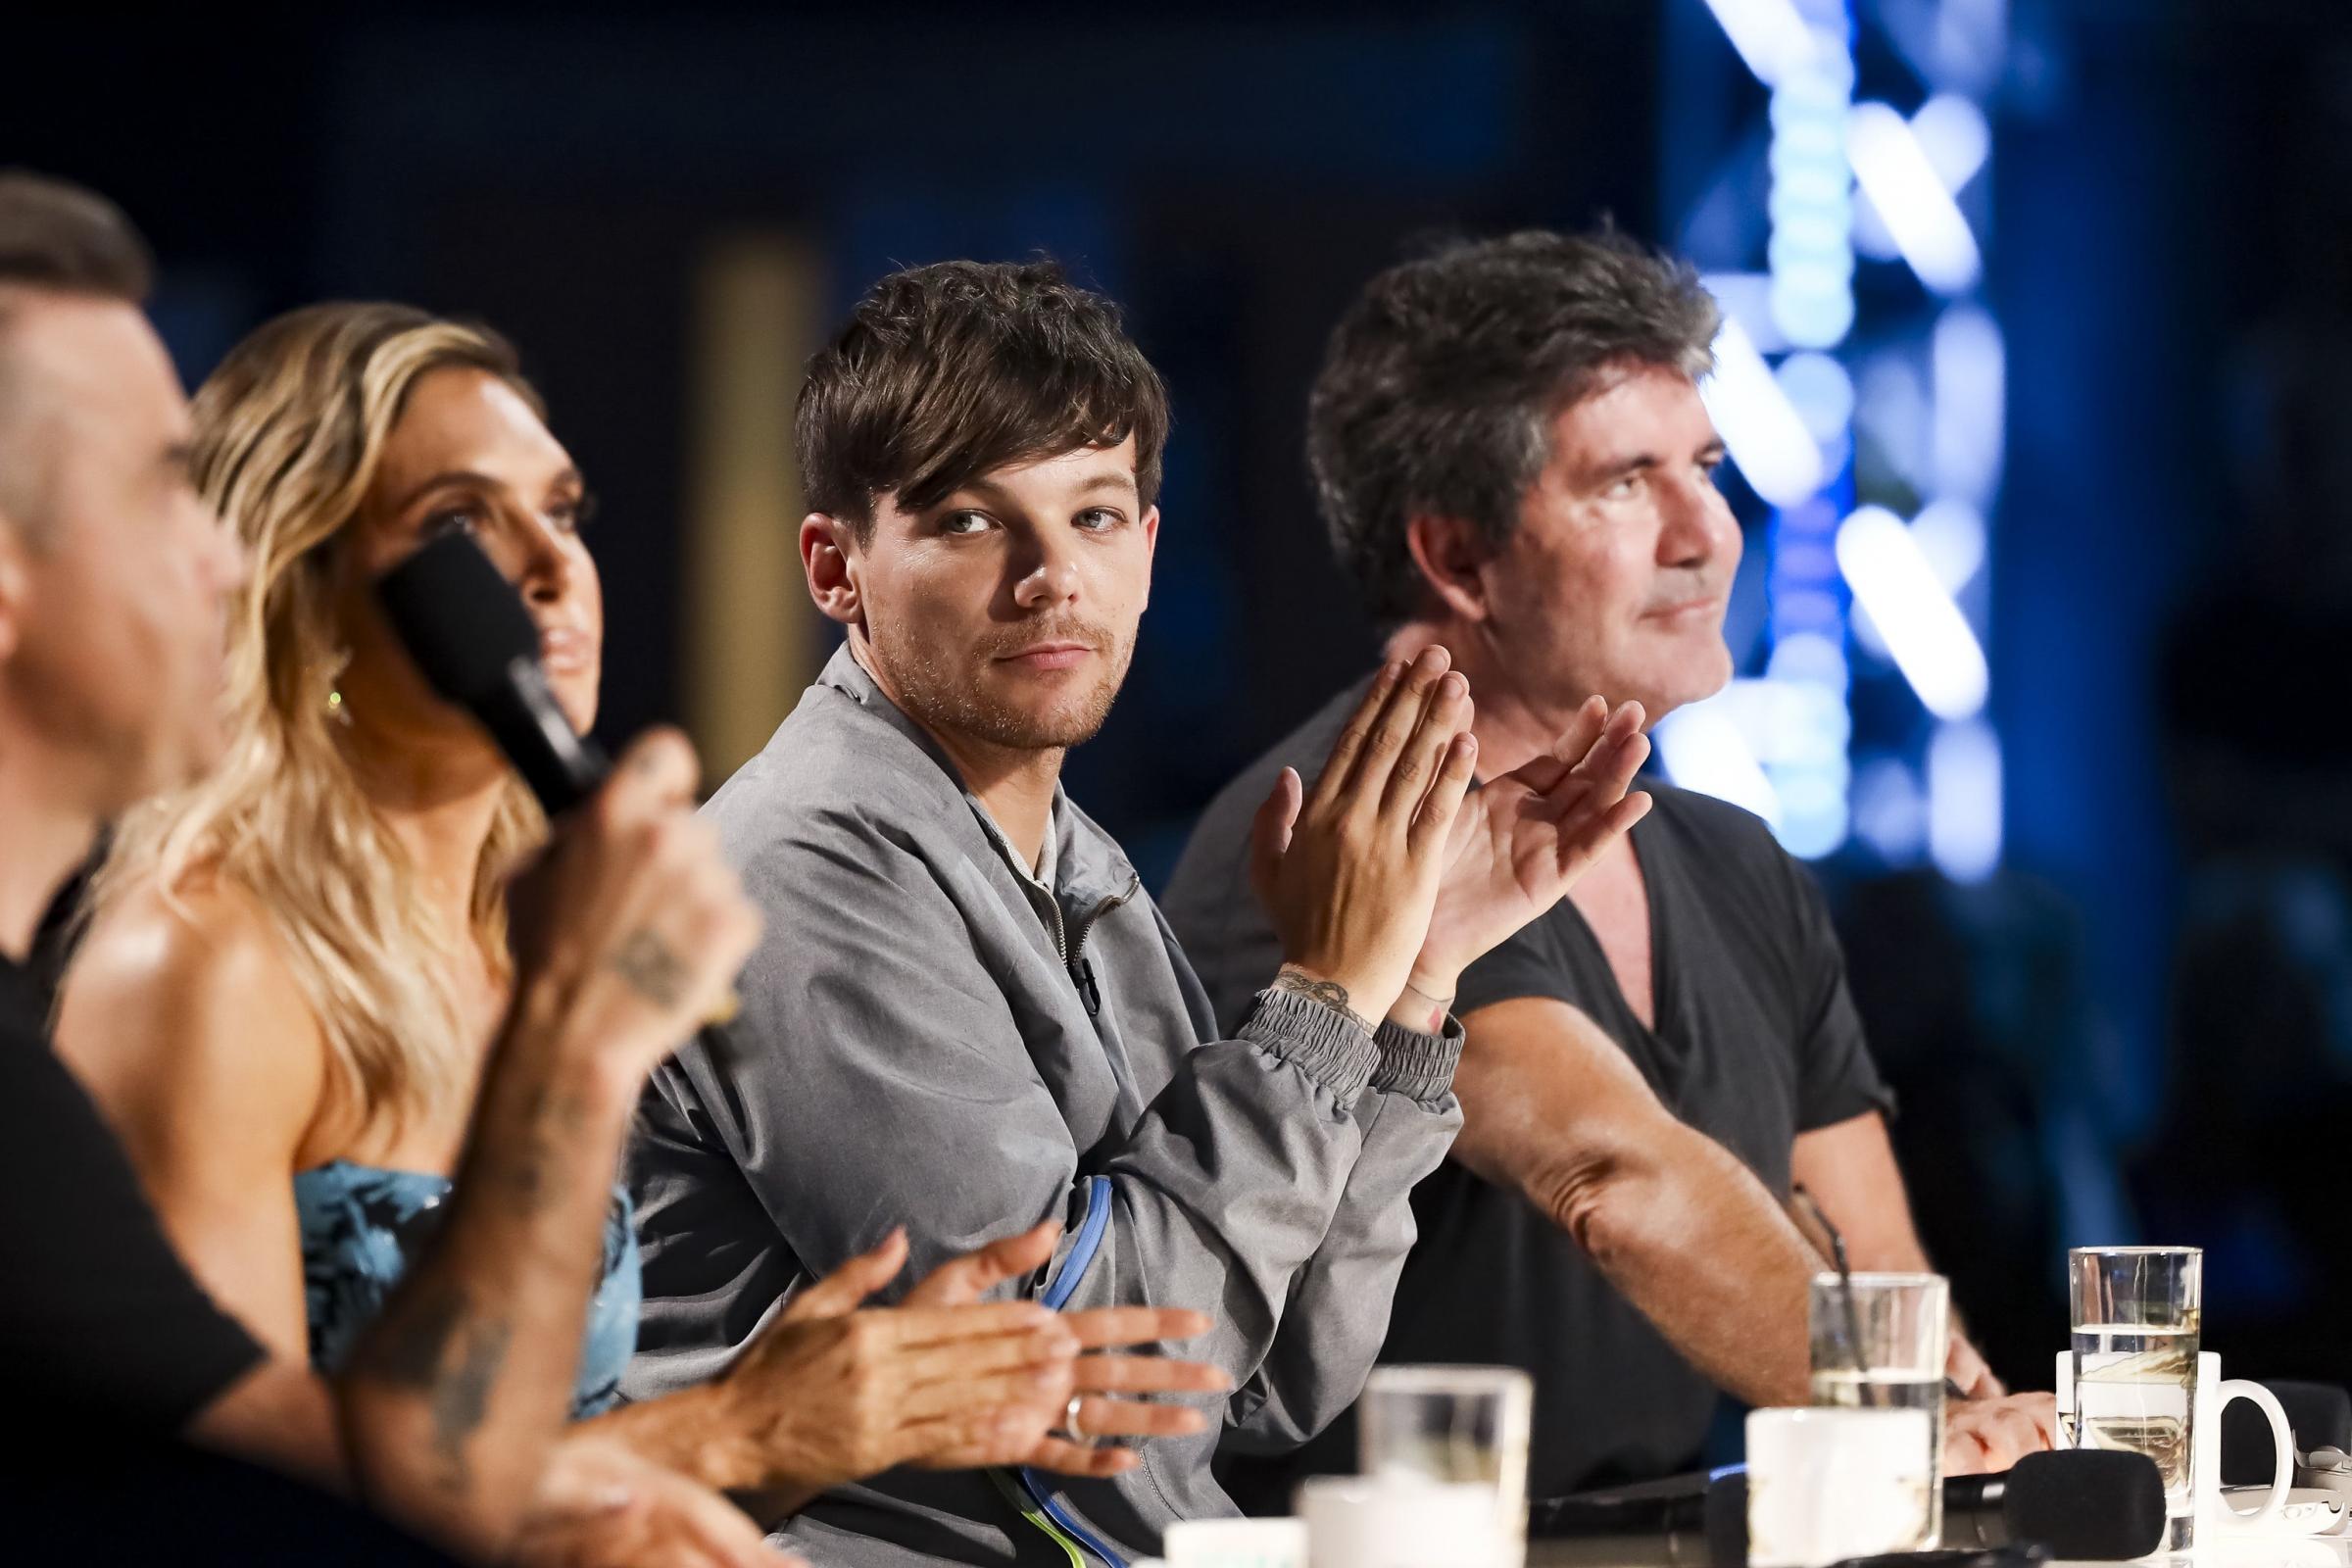 Last three X Factor contestants go head-to-head as series final begins